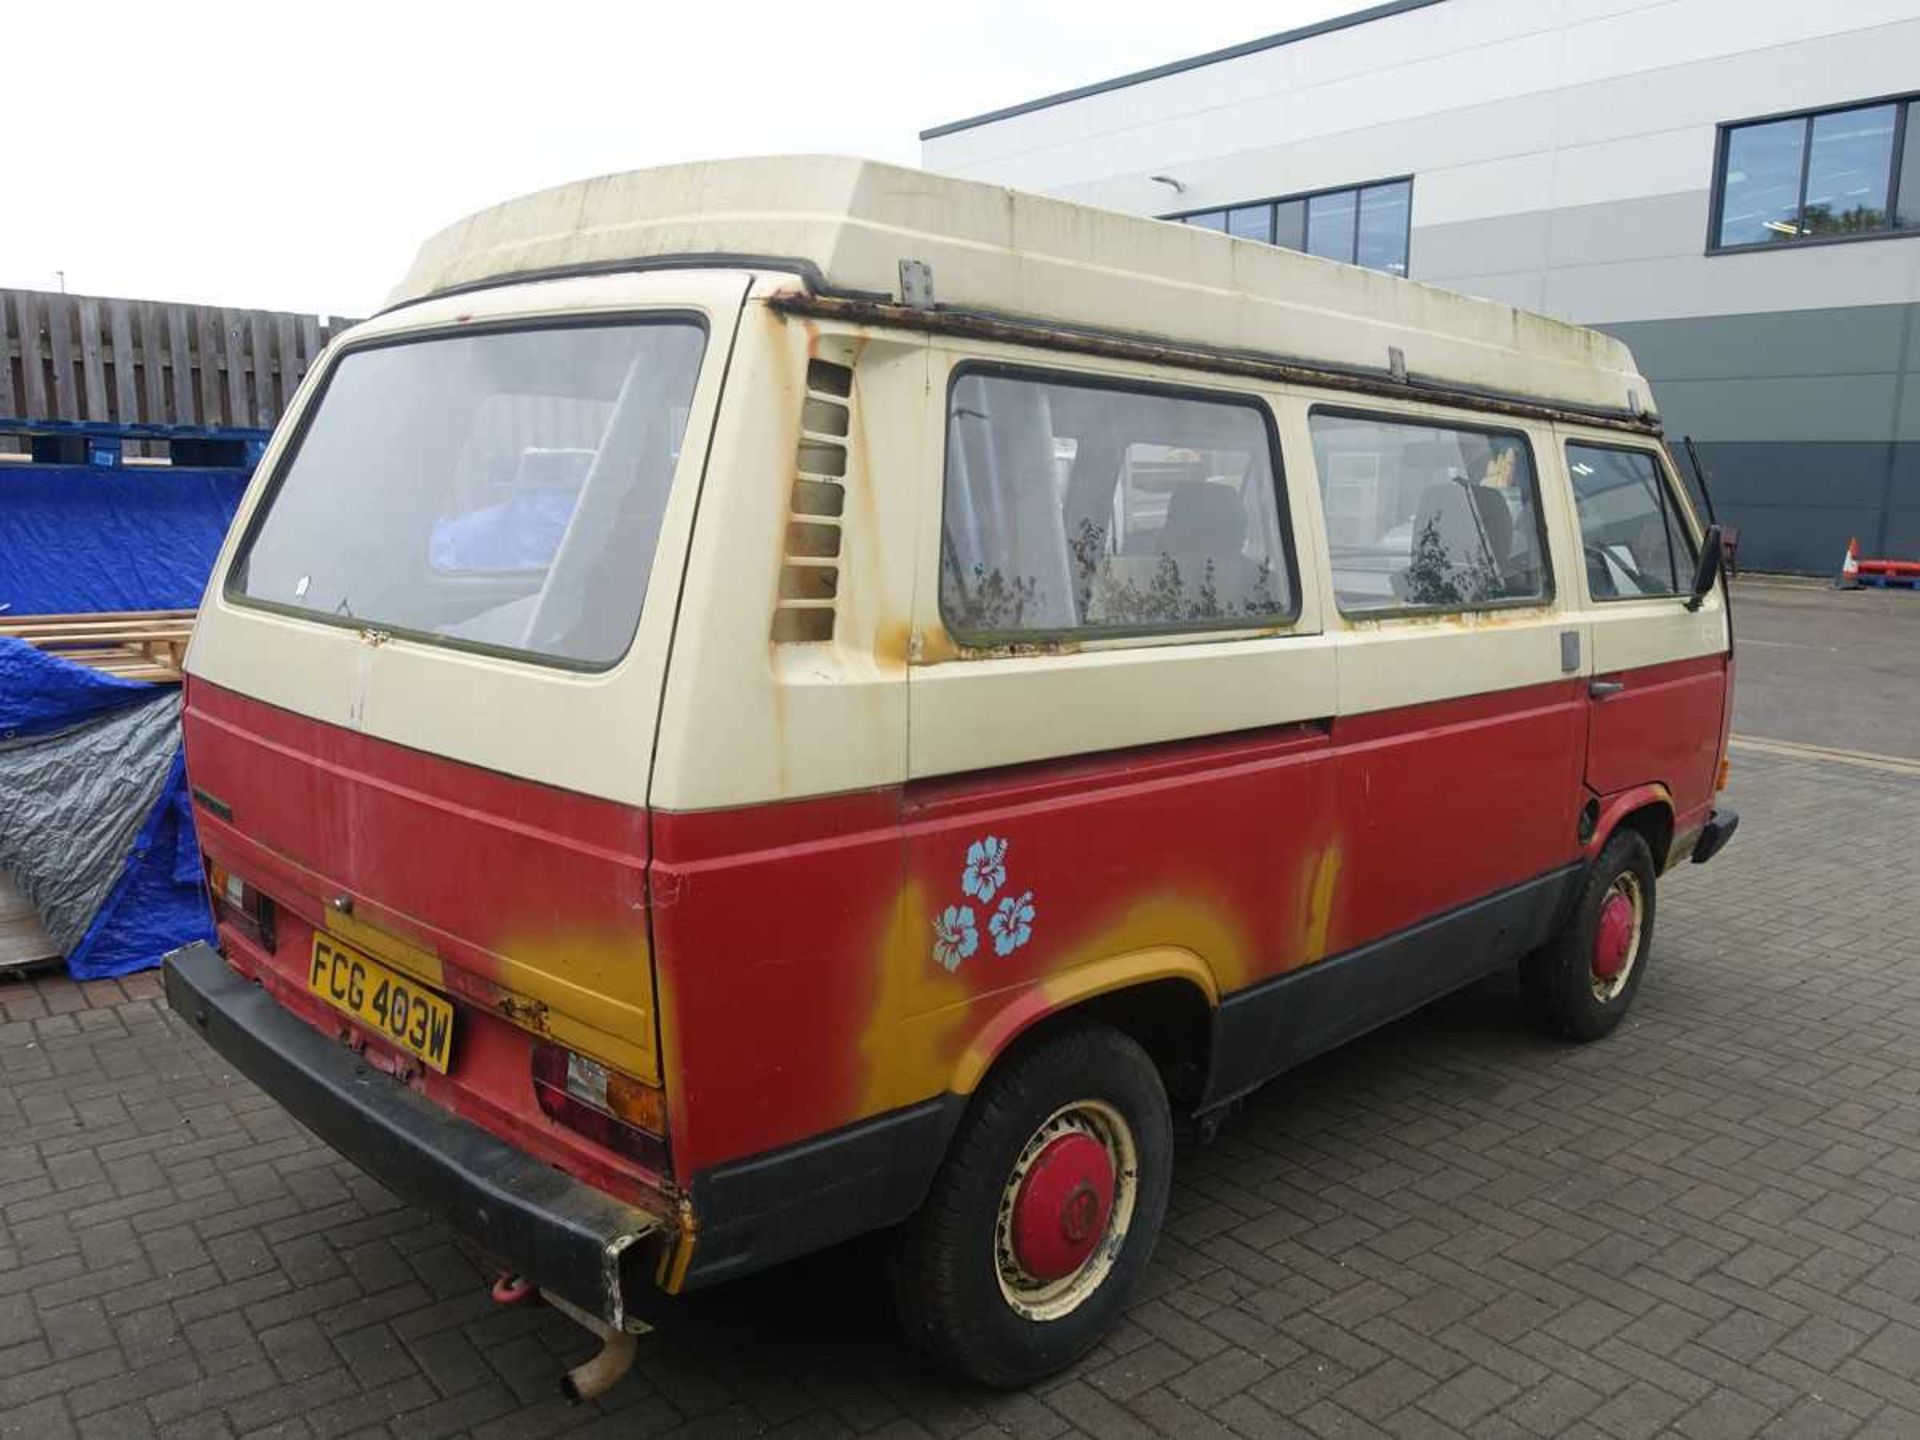 (FCG 403W) Volkswagen T25 Camper Van, Devon Moonraker in red and cream, with original gas fridge - Image 16 of 17